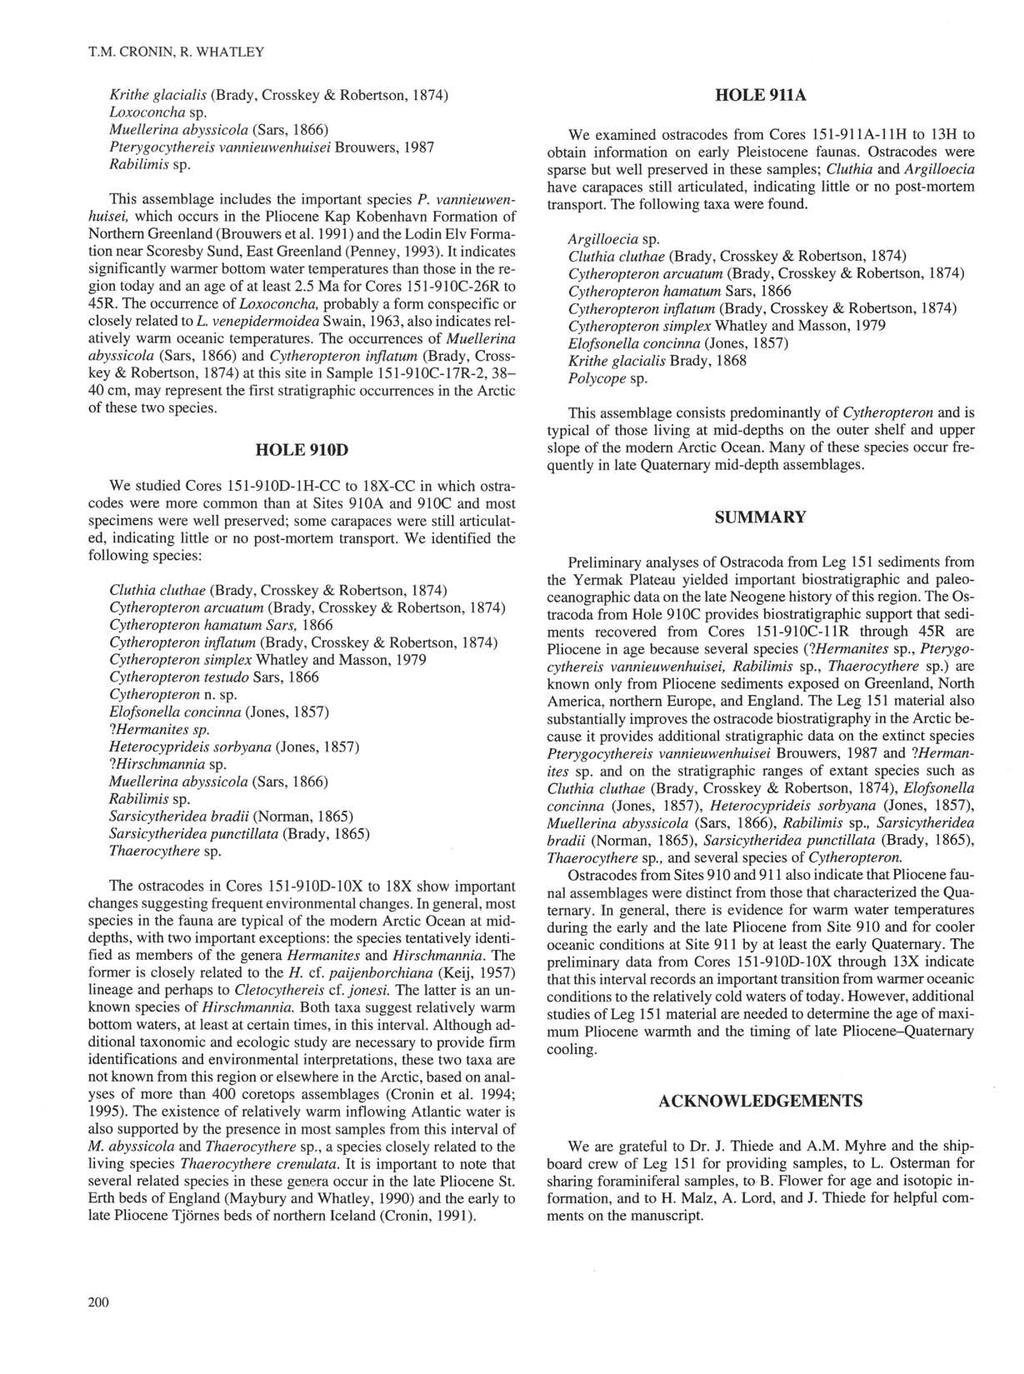 T.M. CRONIN, R. WHATLEY Krithe glacialis (Brady, Crosskey & Robertson, 874) Loxoconcha sp.